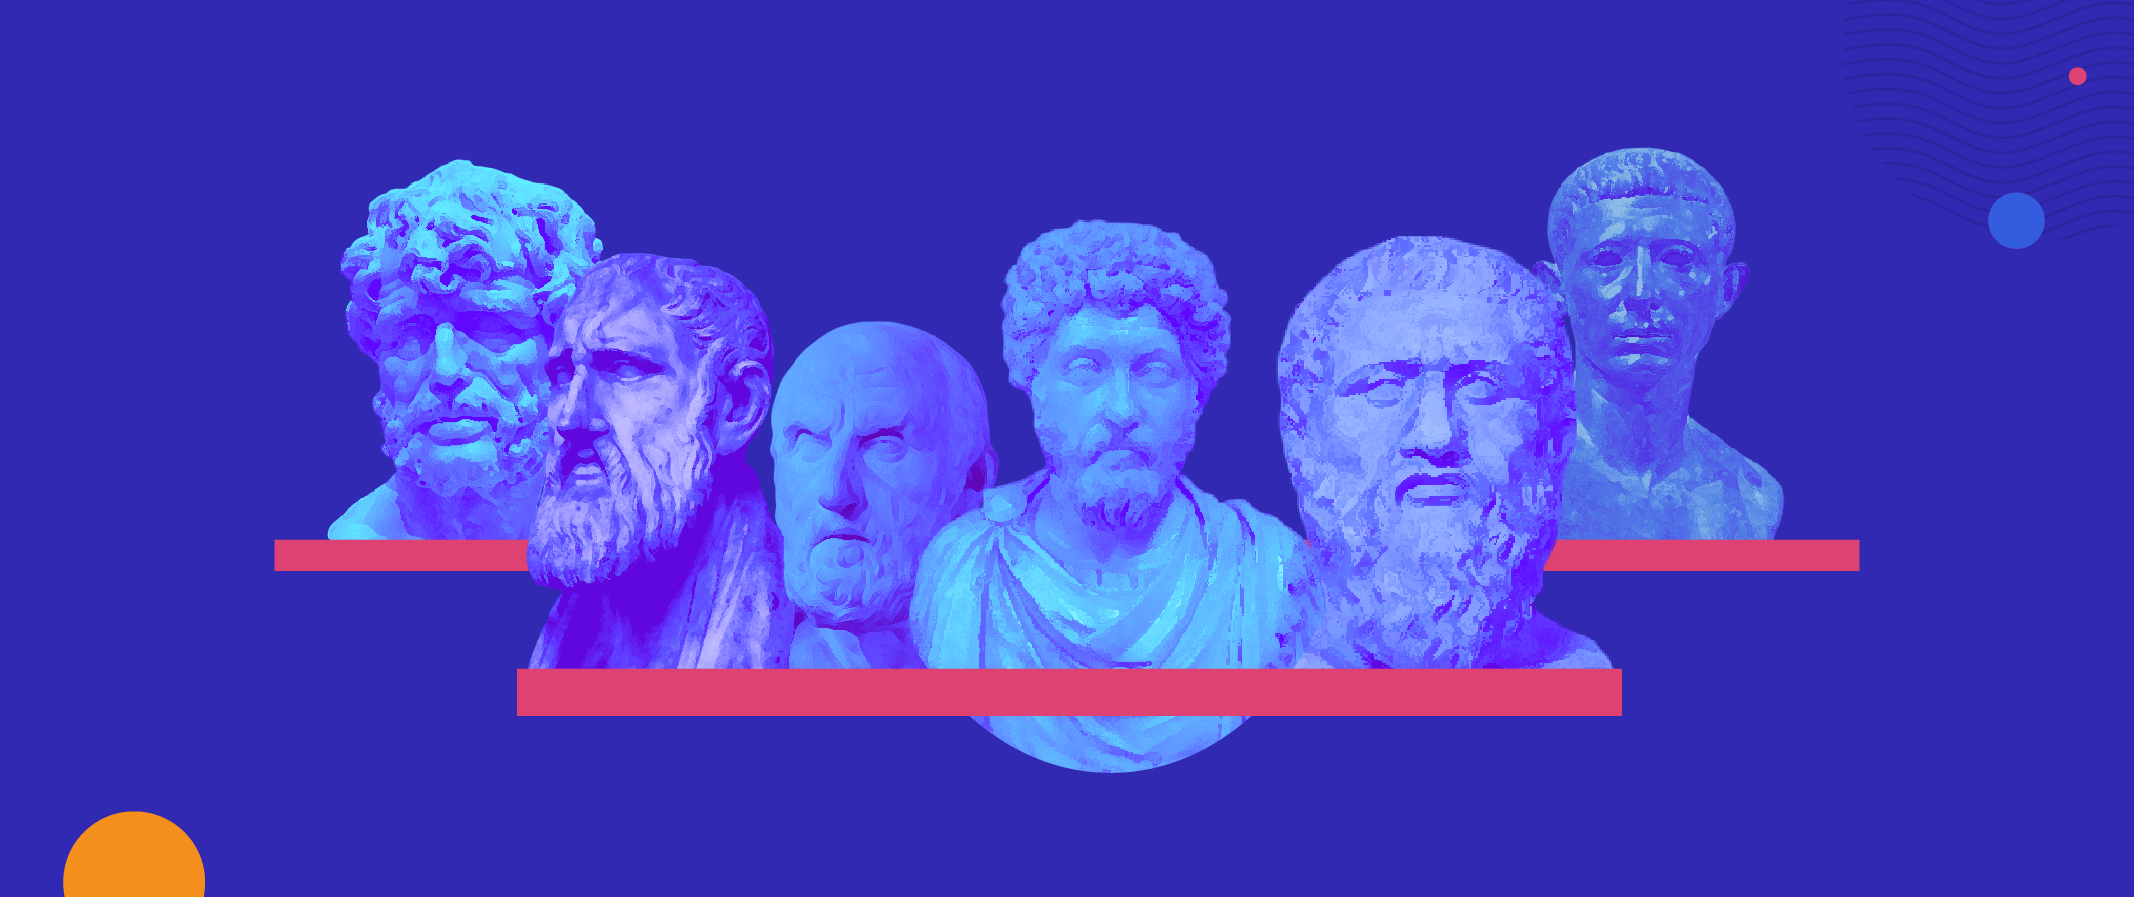 29 Stoicism ideas | stoicism quotes, philosophy quotes, stoic quotes